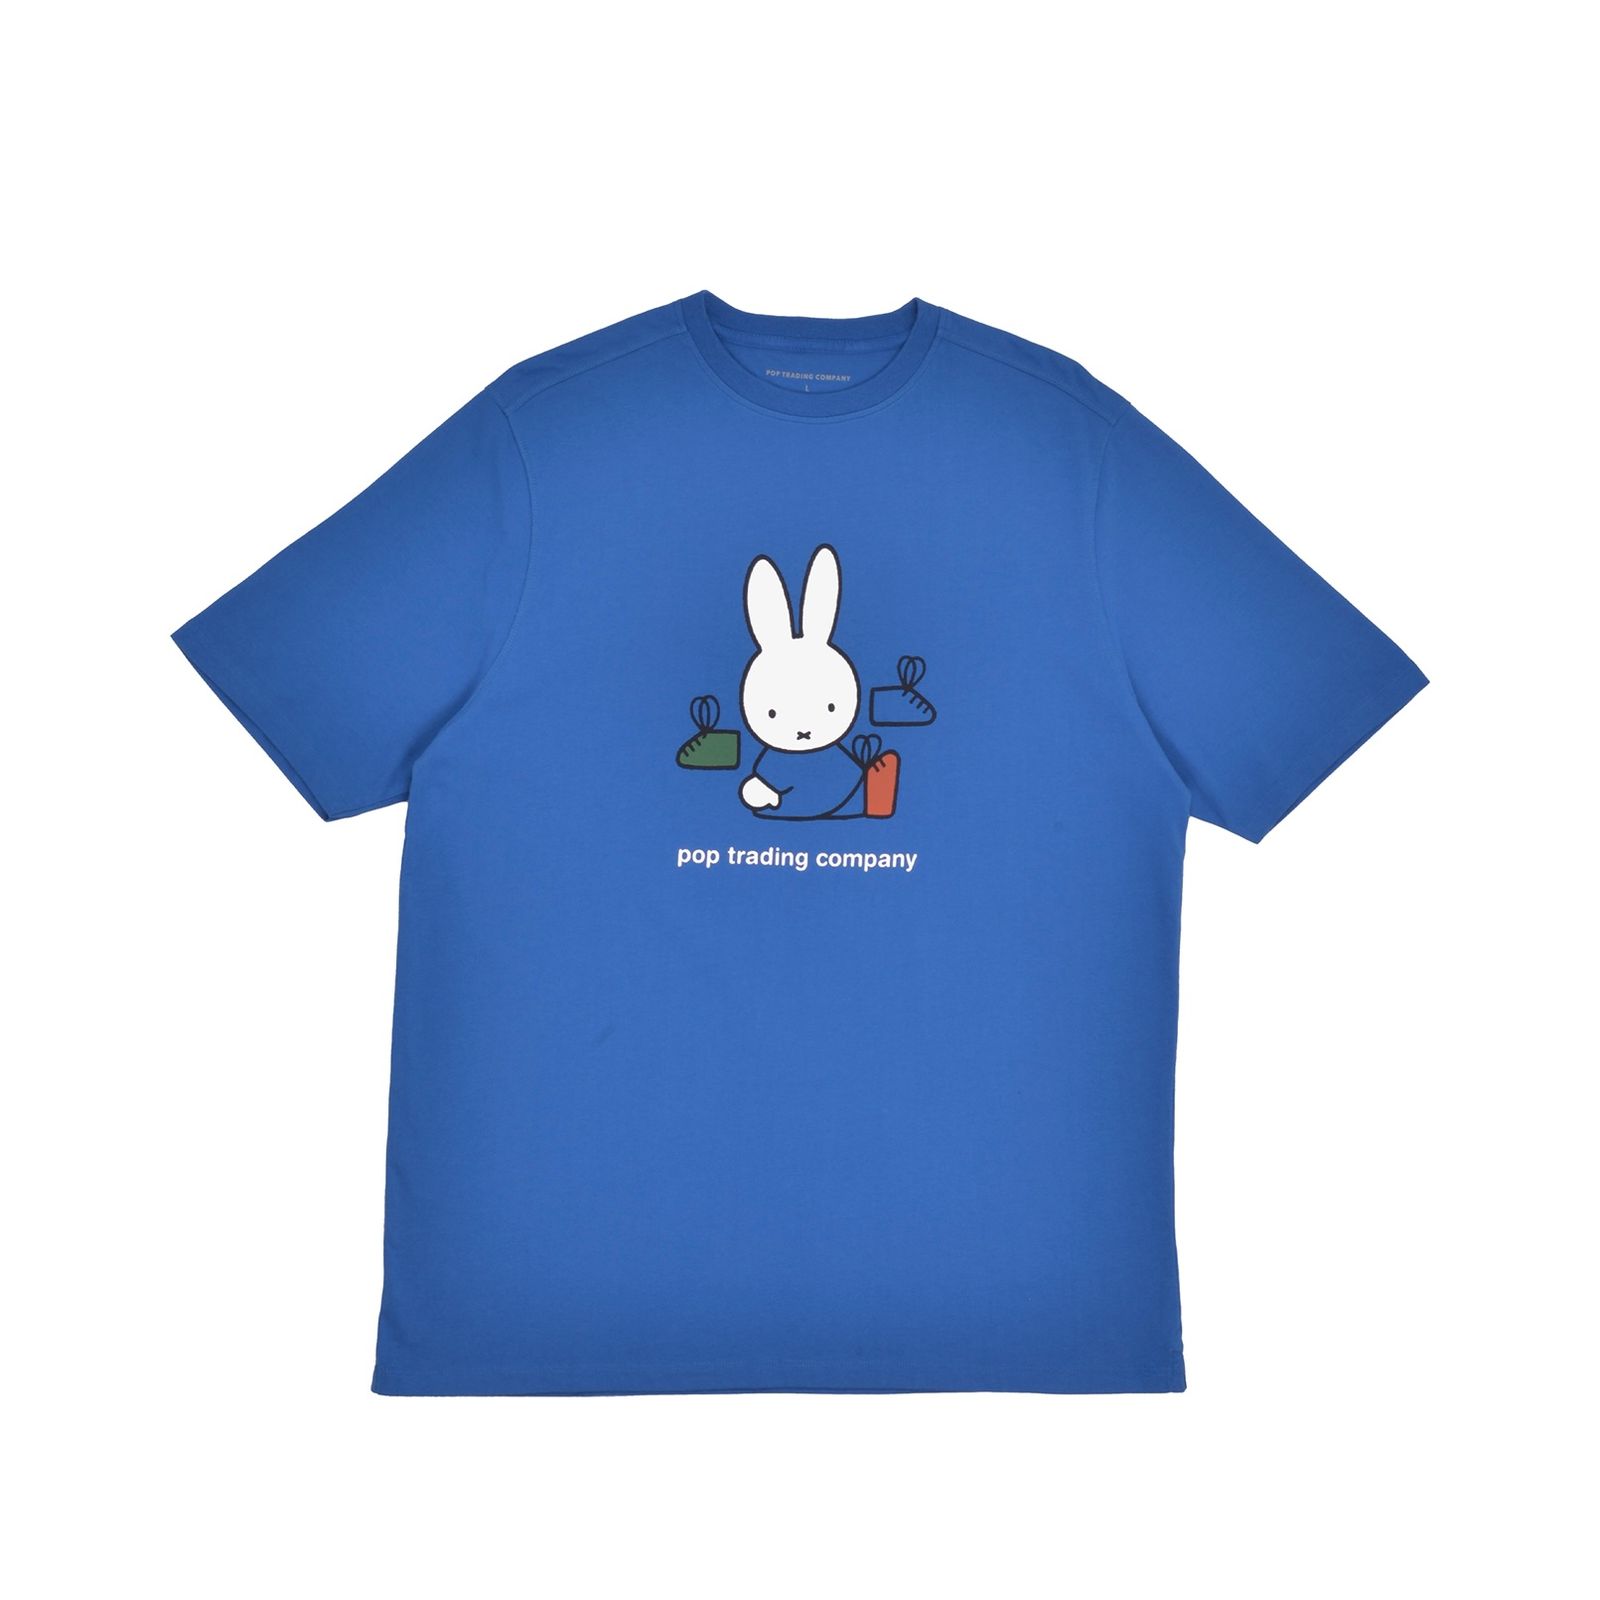 Pop Trading Company - 【残りわずか】Miffy Footwear T-shirt